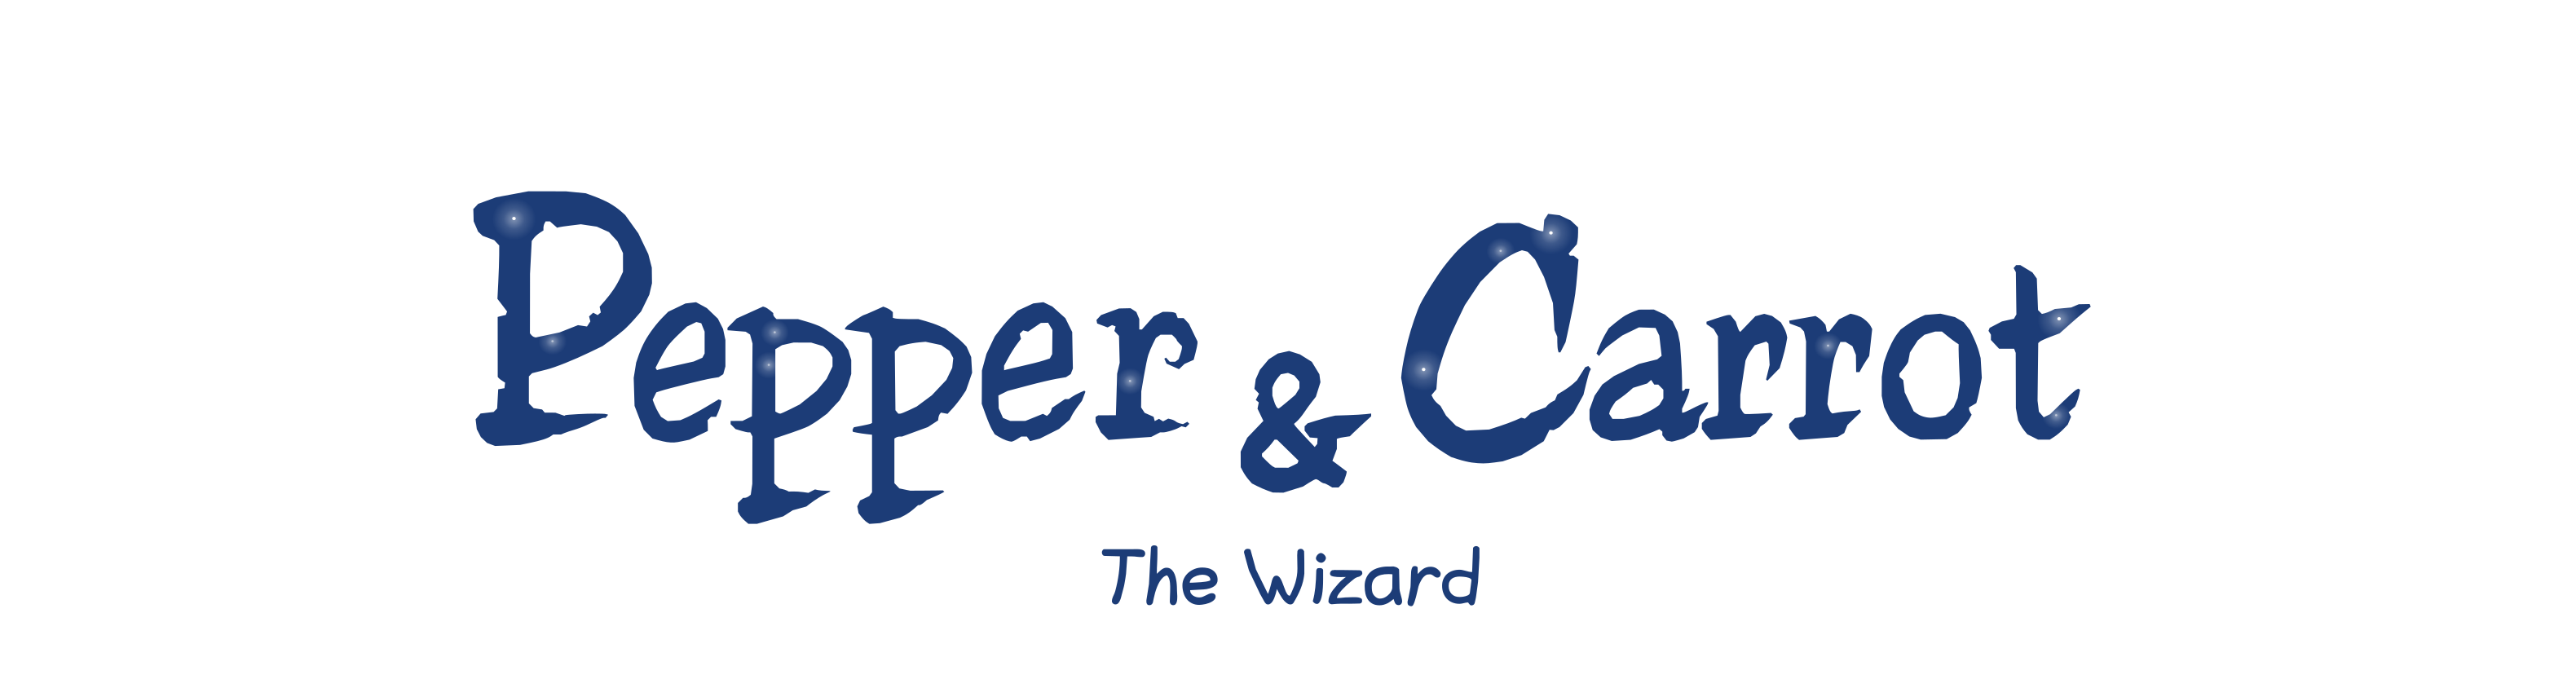 Pepper&Carrot: The Wizard